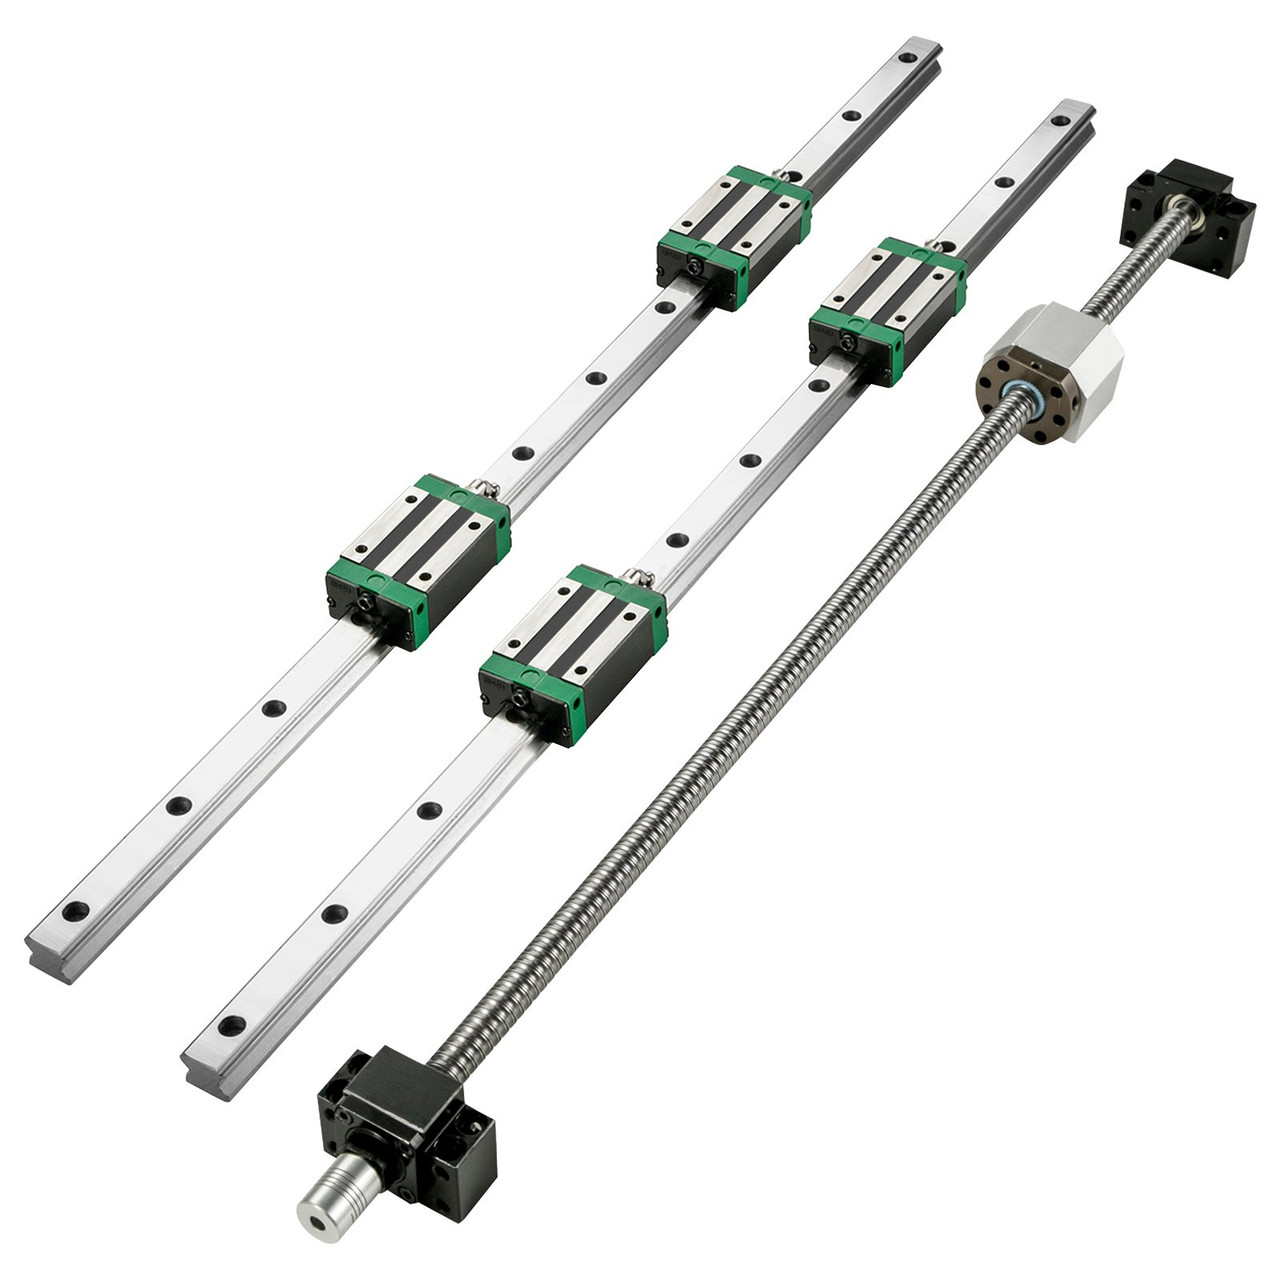 Linear Guide Rail, 2PCS HGR20-1000mm Linear Slide Rail + 1Pcs RM1605-1000mm Ballscrew with BF12/BK12 Kit, Coupling, Slide Blocks Linear Guide Rail Set for DIY CNC Routers Lathes Mills